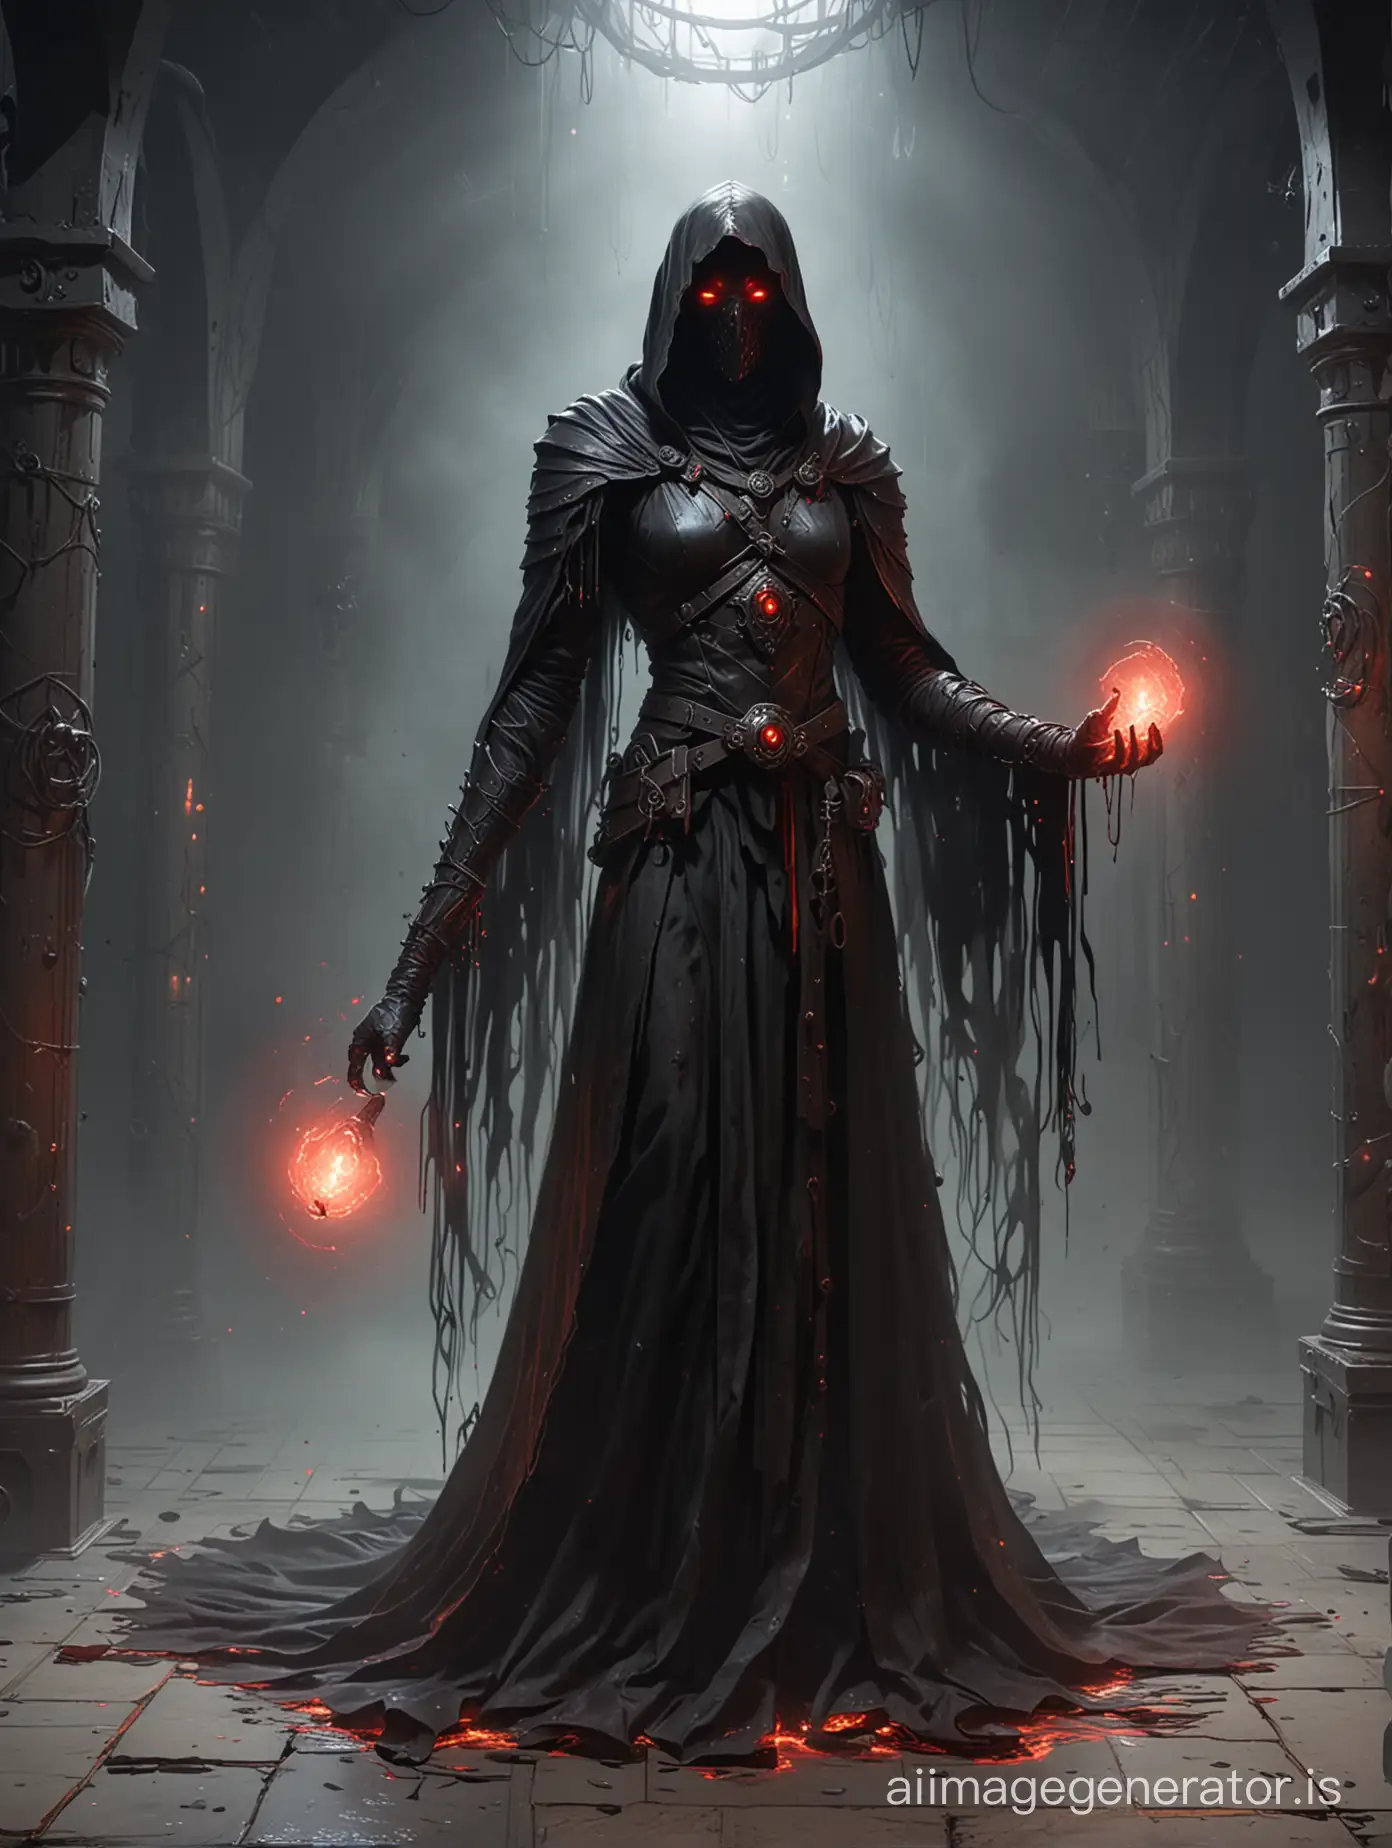 Shadowy-Wraith-Wizard-Conjuring-Magic-in-Underground-Dungeon